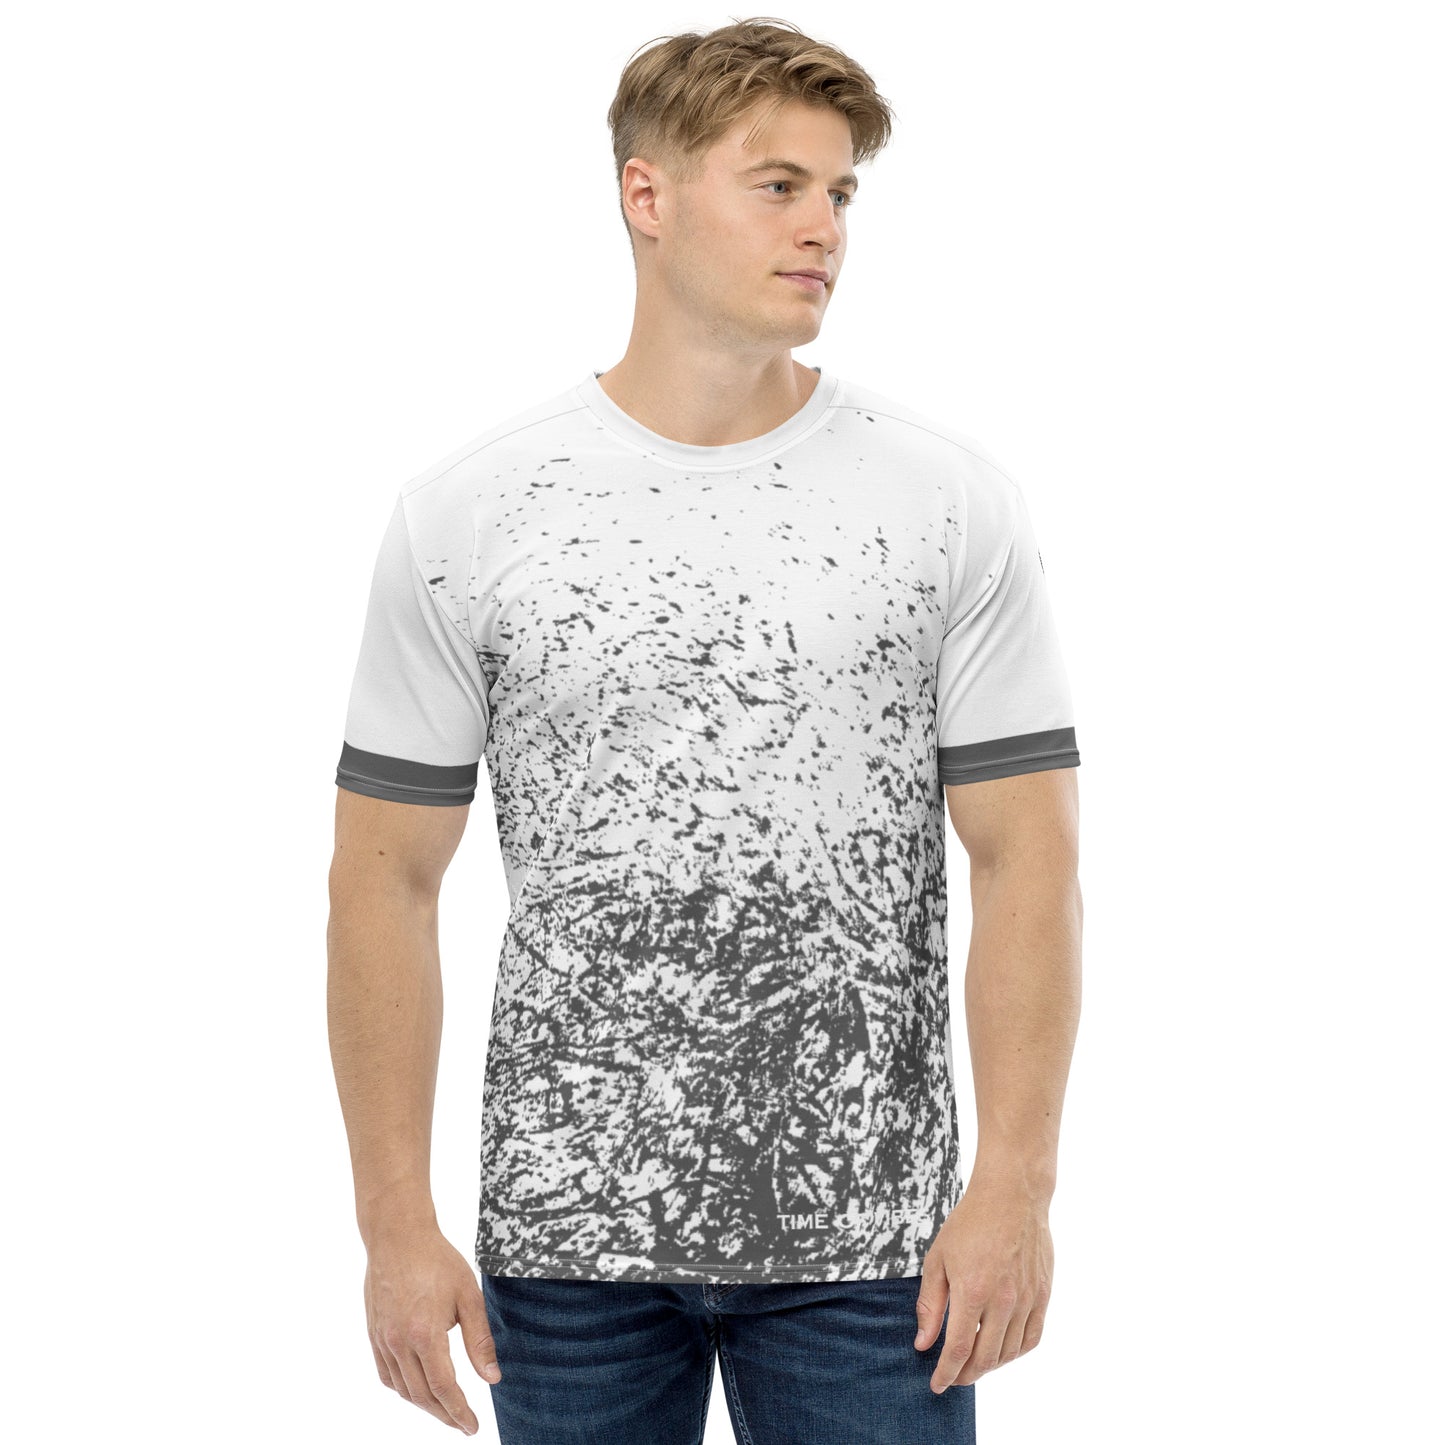 TIME OF VIBES - Premium Men's T-Shirt GRUNGE (White/Grey) - €49.00